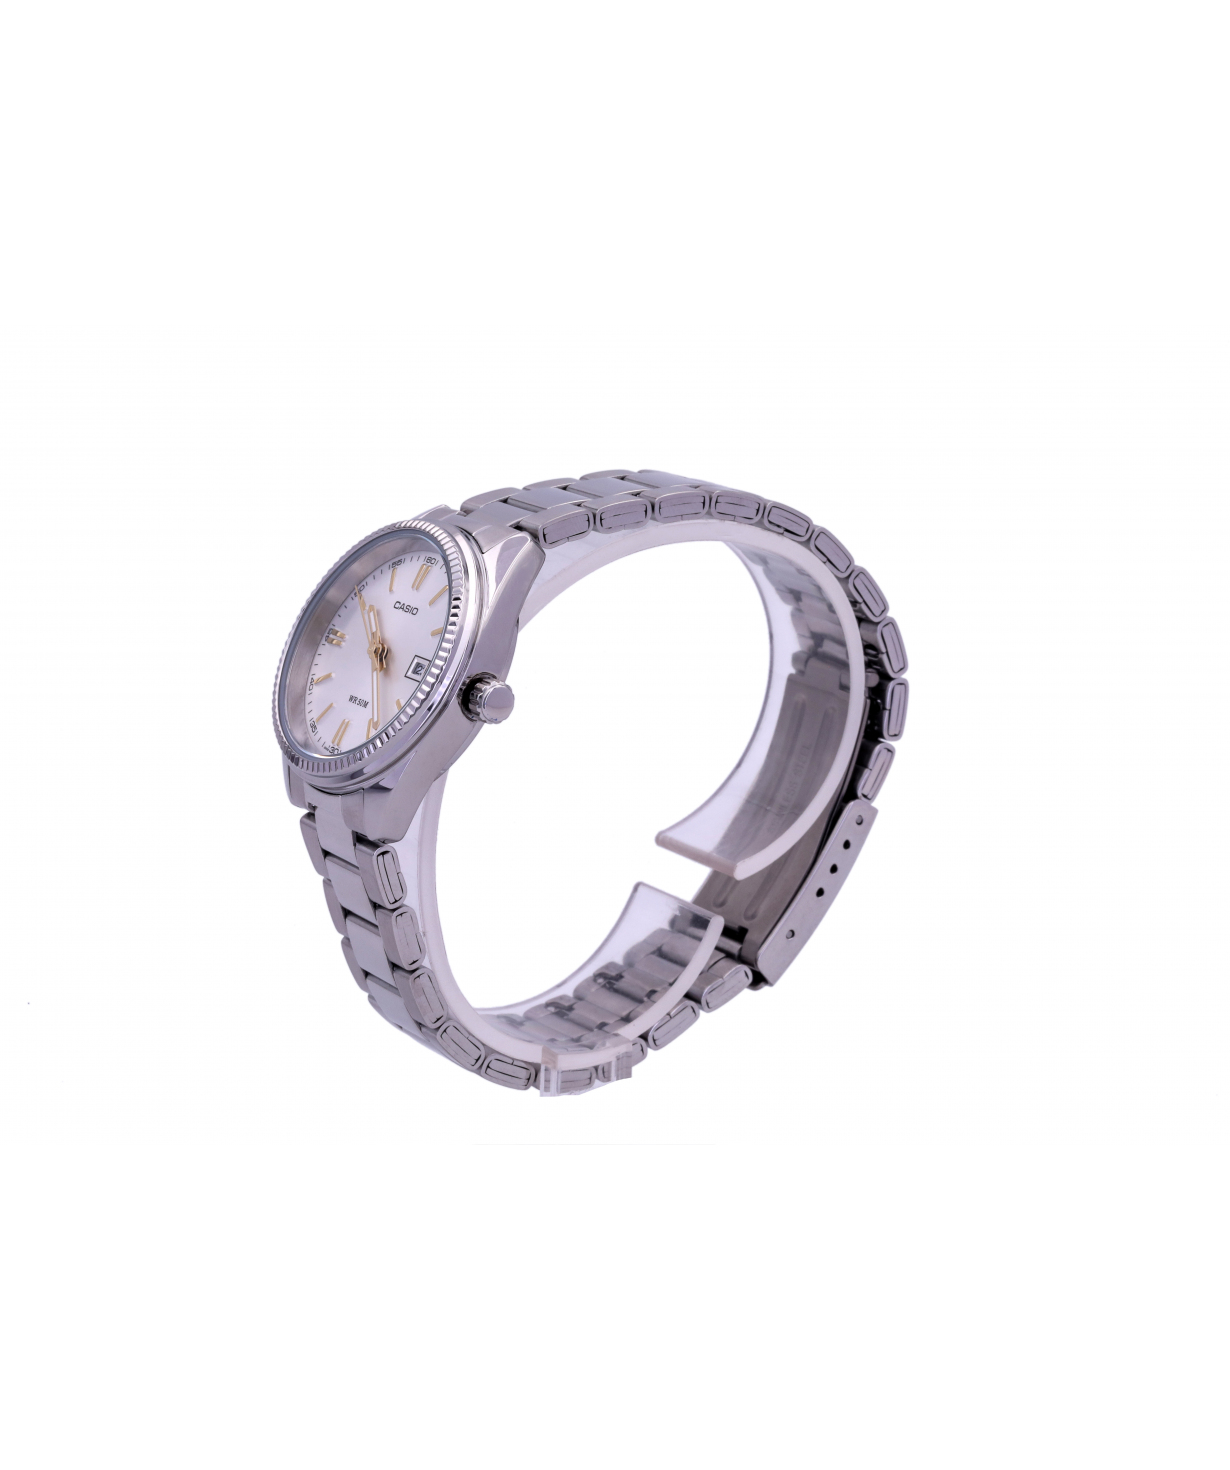 Wristwatch `Casio` LTP-1302D-7A2VDF